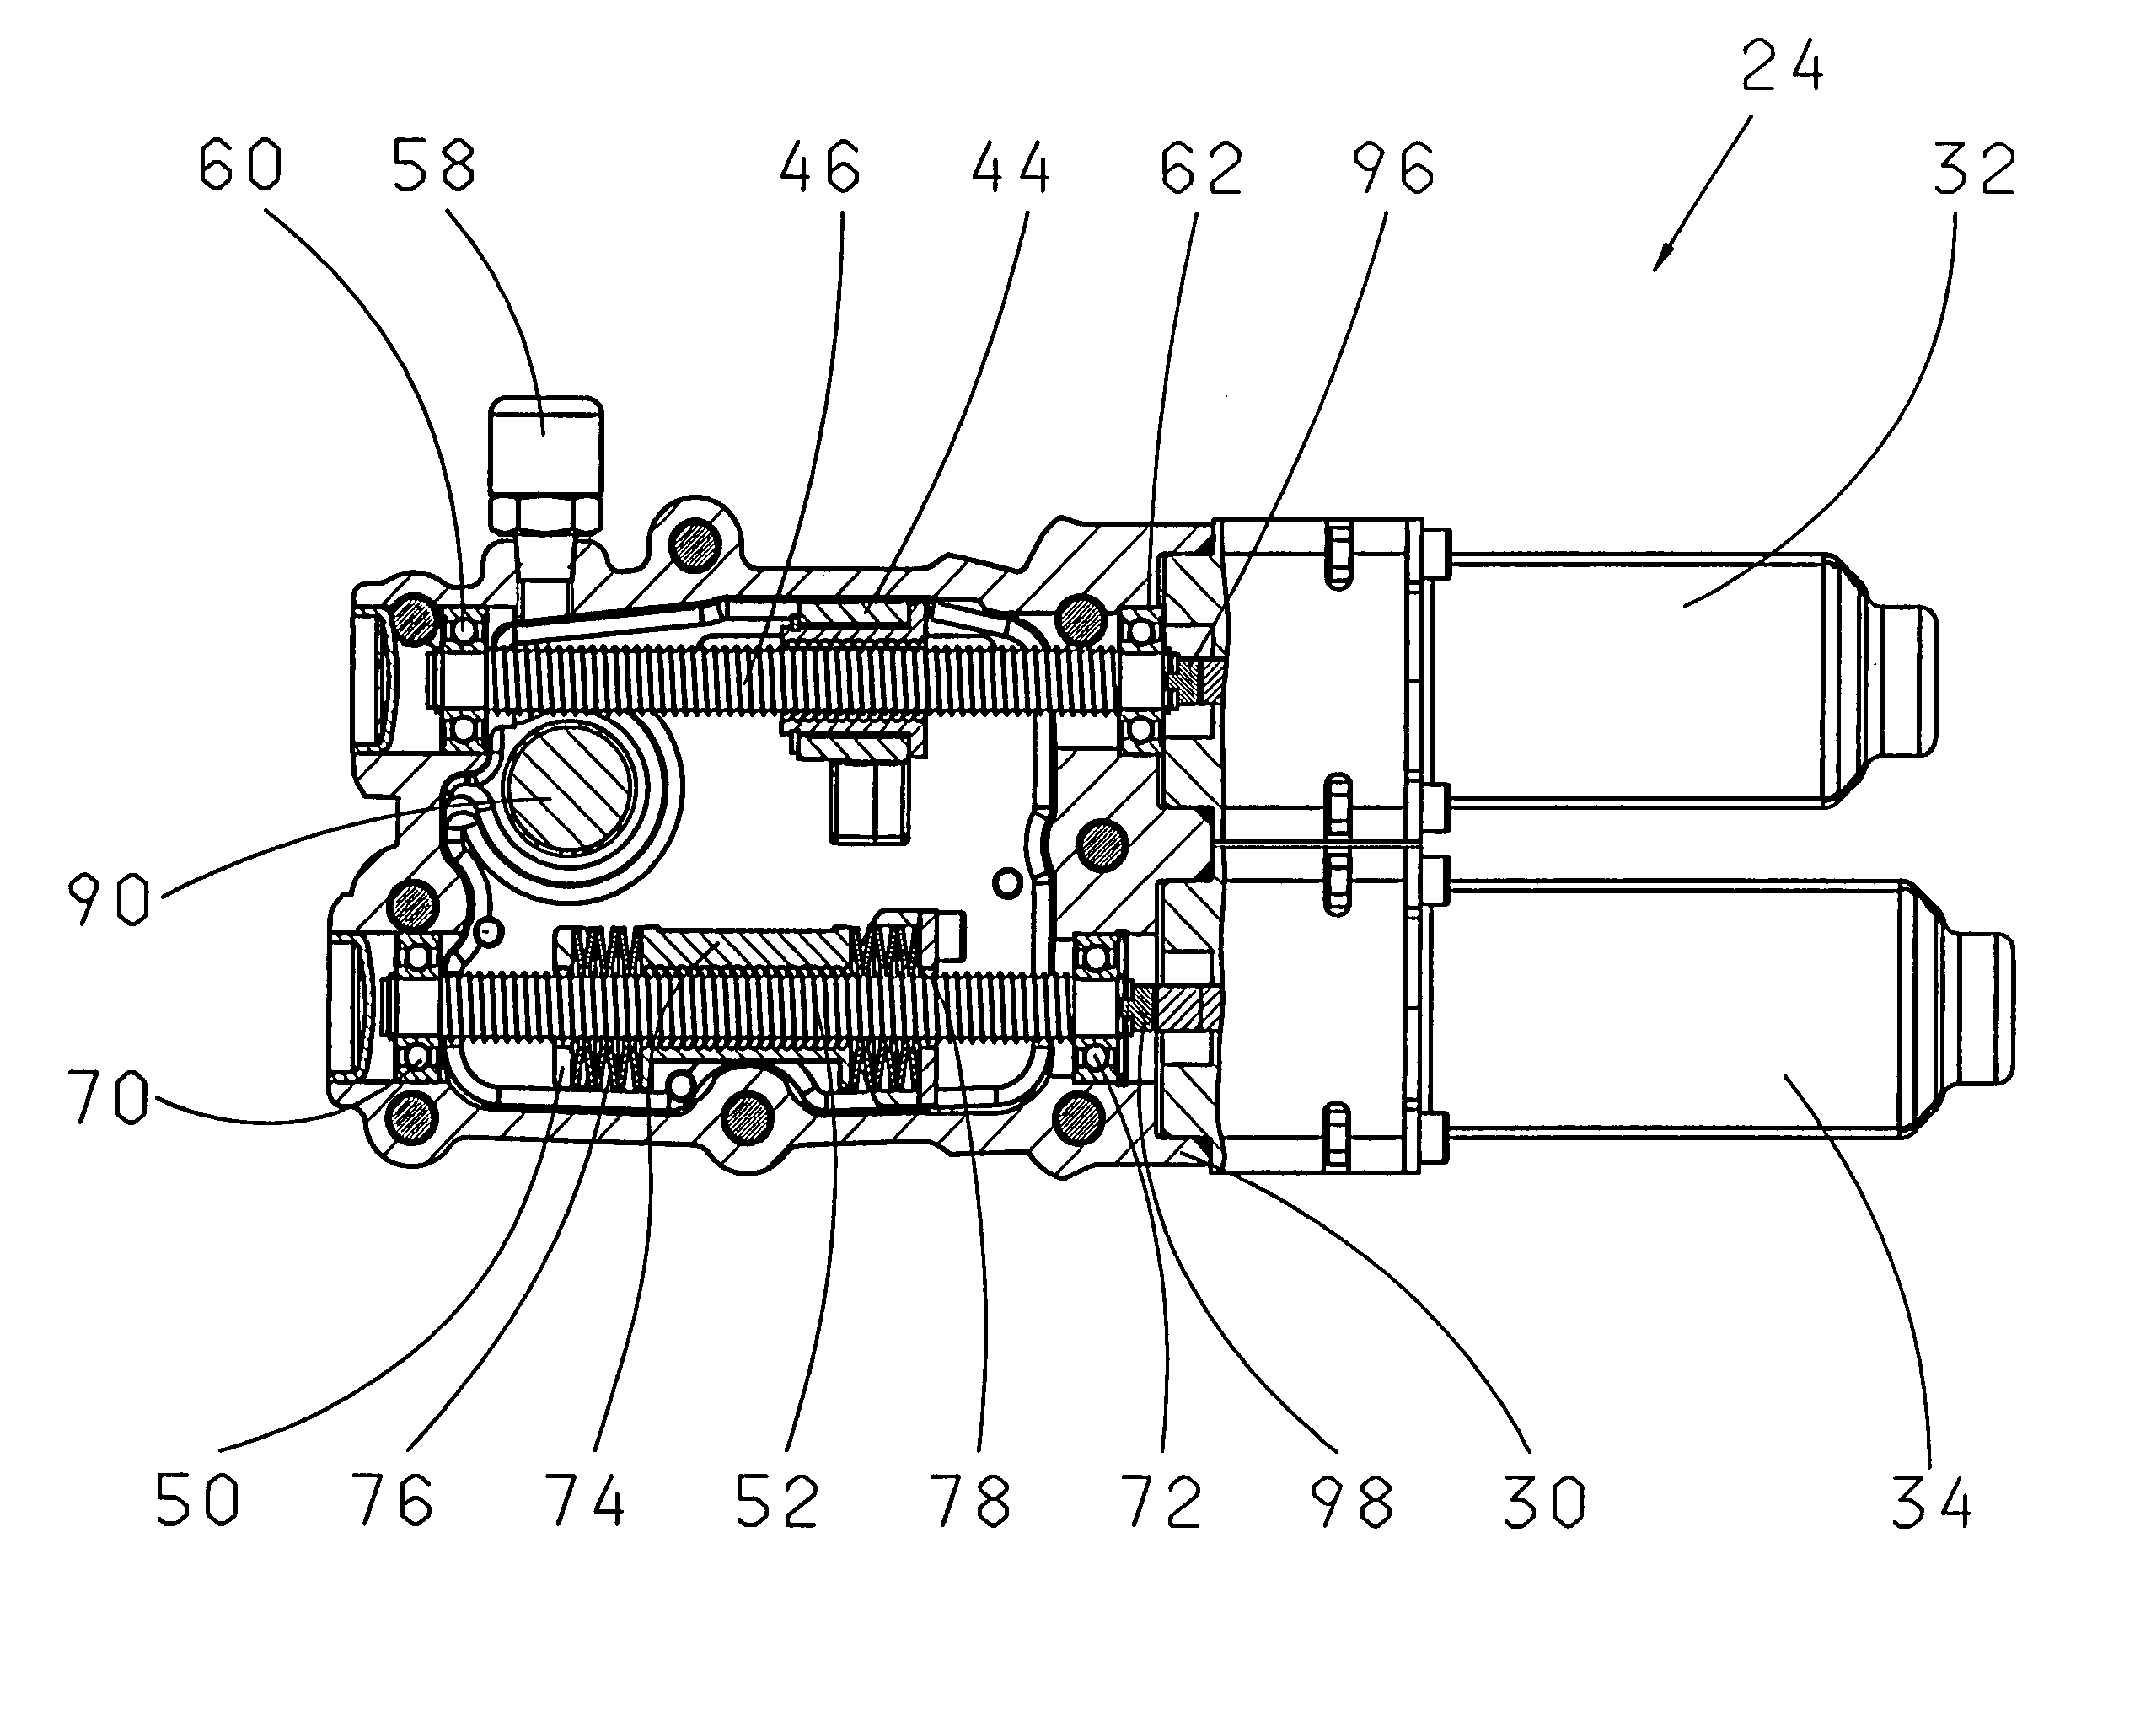 Gearbox comprising an electromechanical actuator